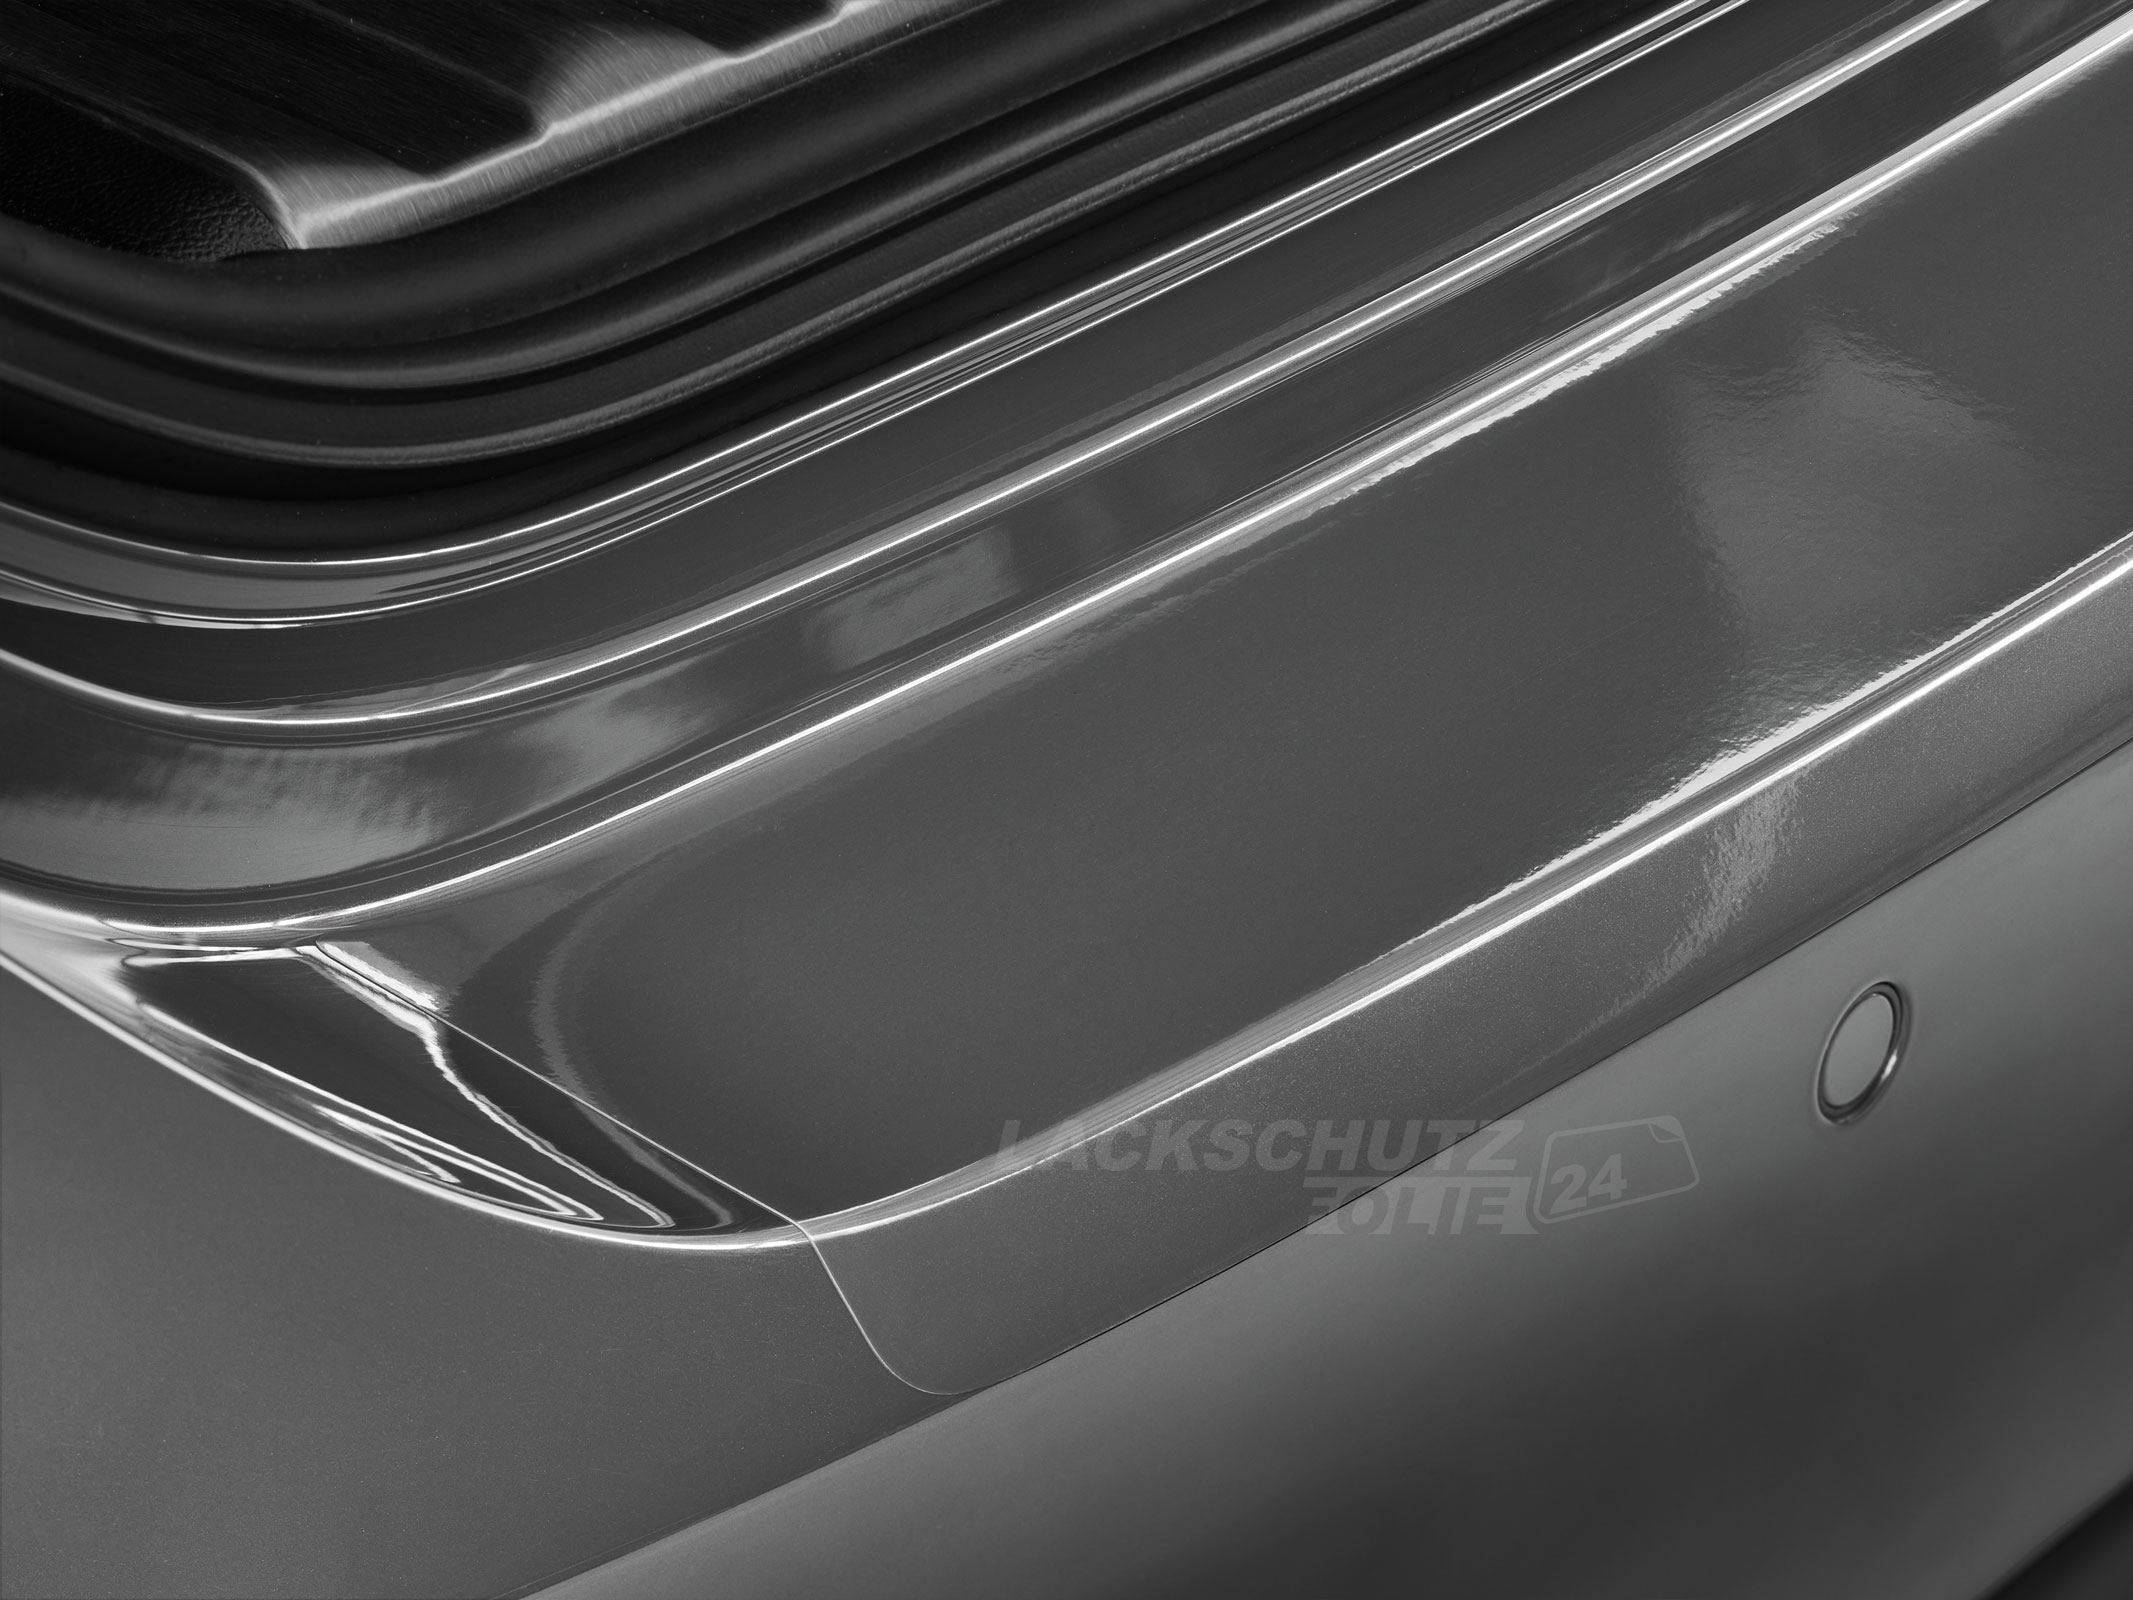 Ladekantenschutzfolie - Transparent Glatt Hochglänzend 240 µm stark für Dacia Sandero (II) Typ B8, BJ 2013-2020 